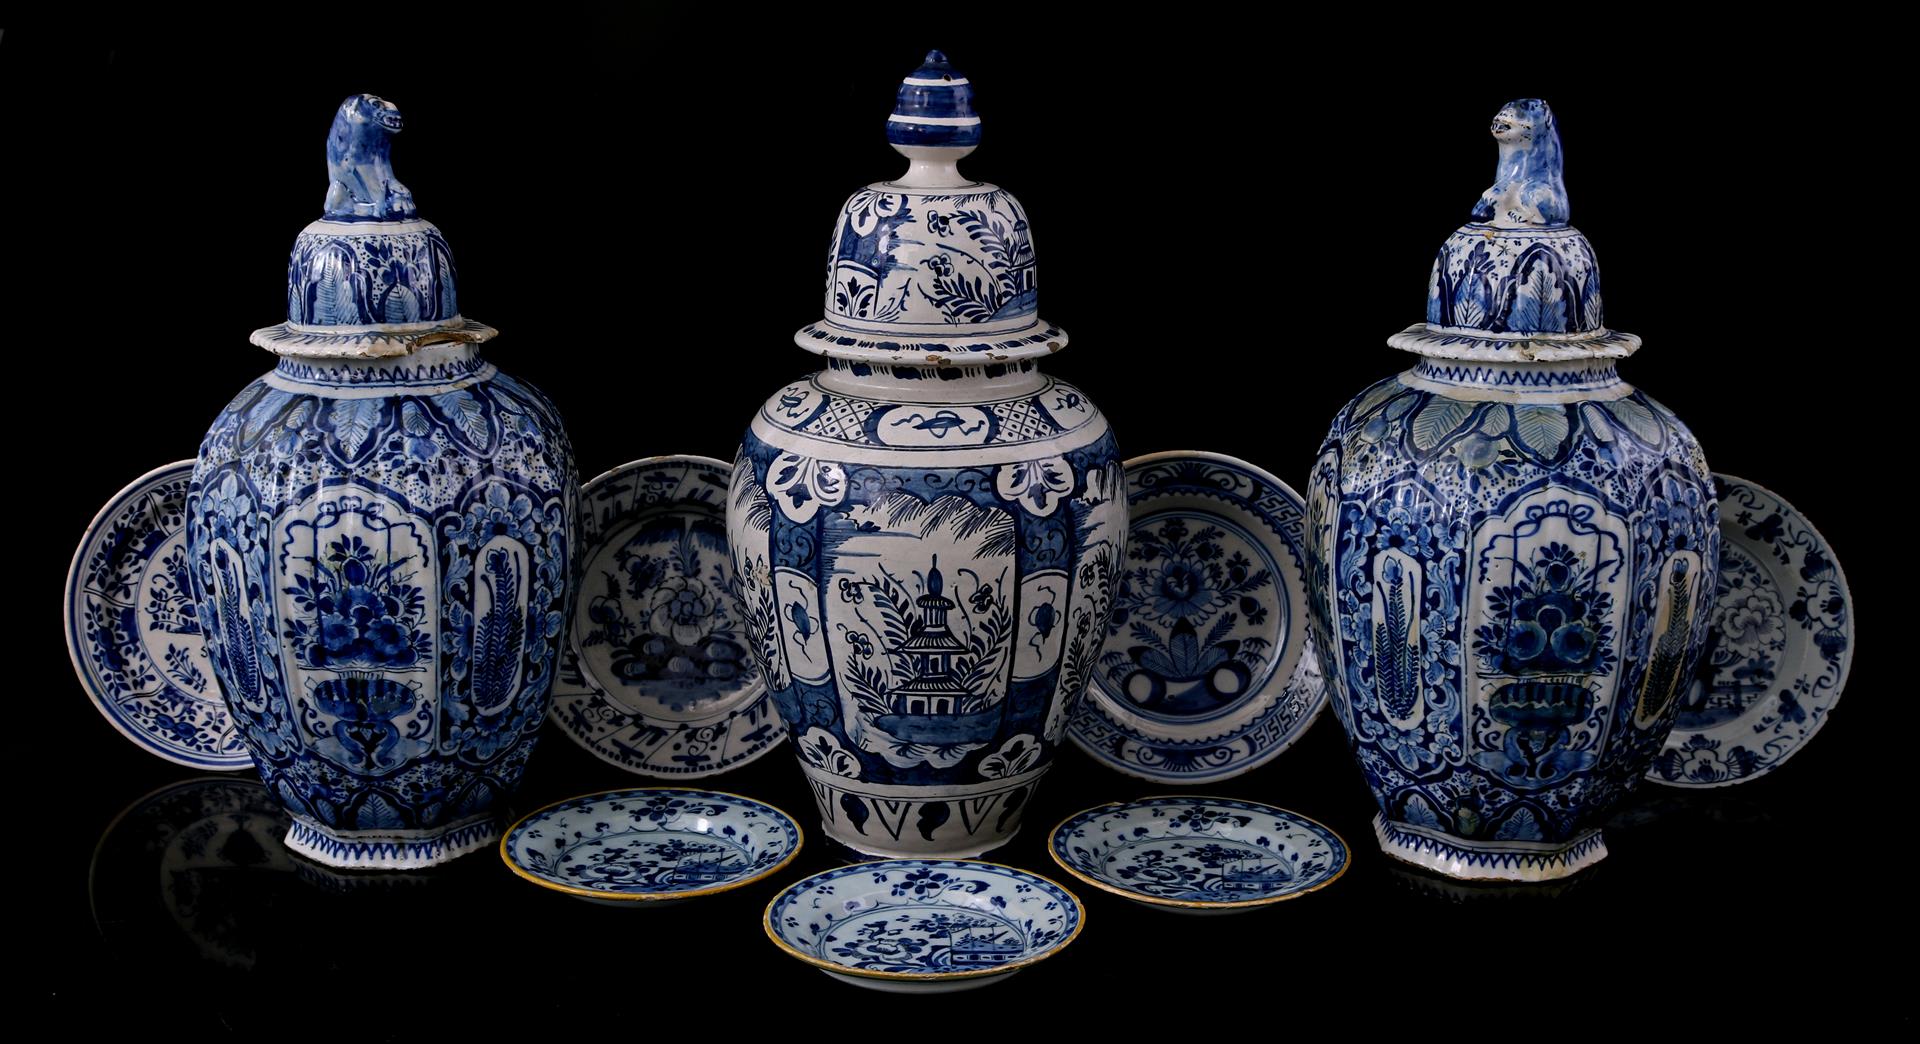 Delft blue earthenware